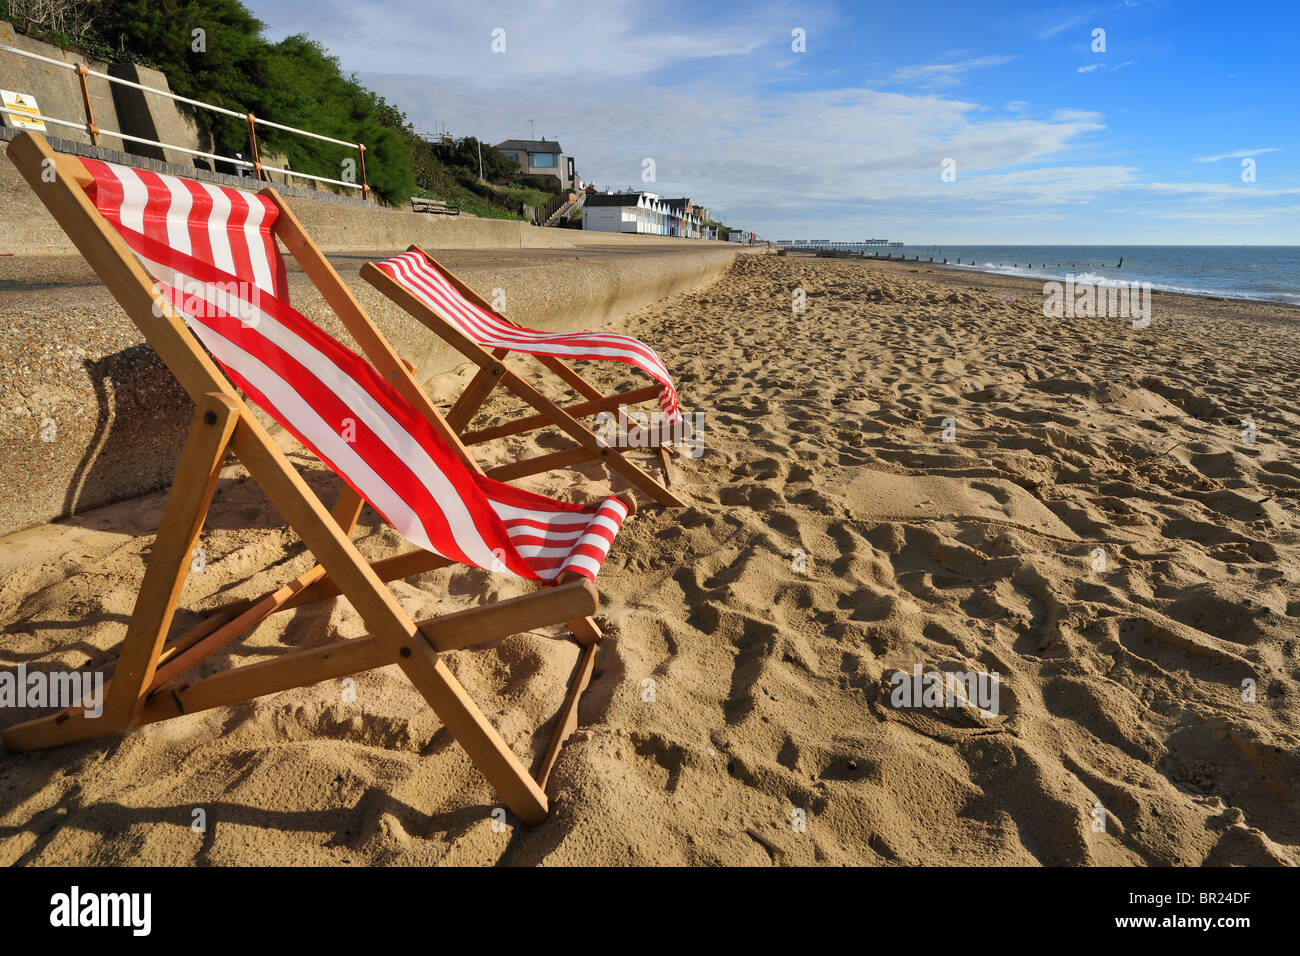 Liegestühle am Strand Stockfoto